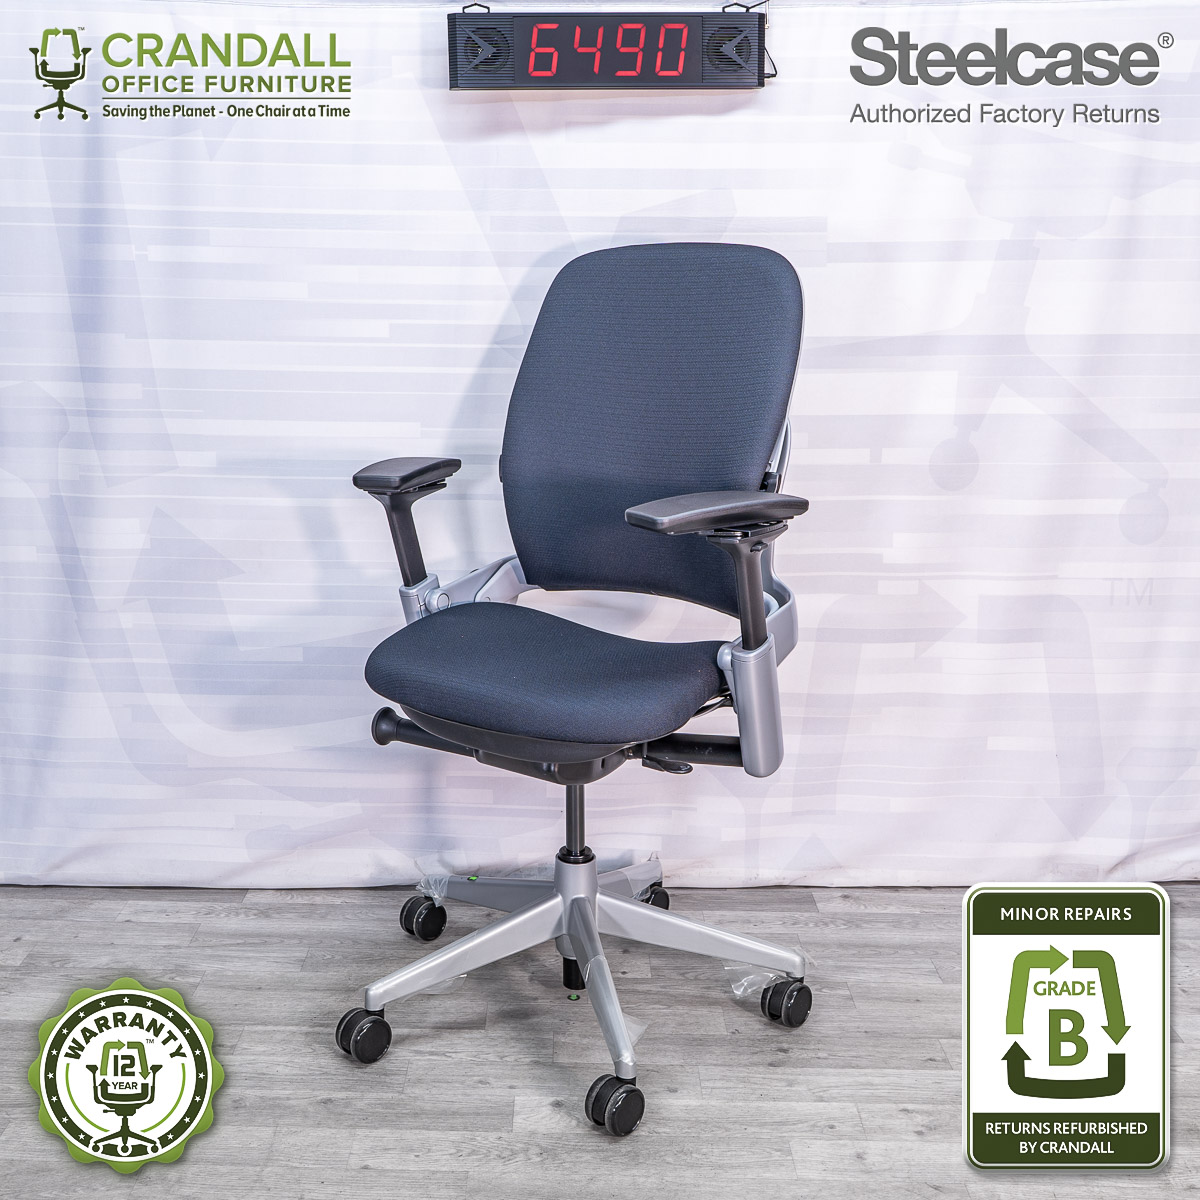 6490 - Steelcase V2 Leap - Grade B - Crandall Office Furniture